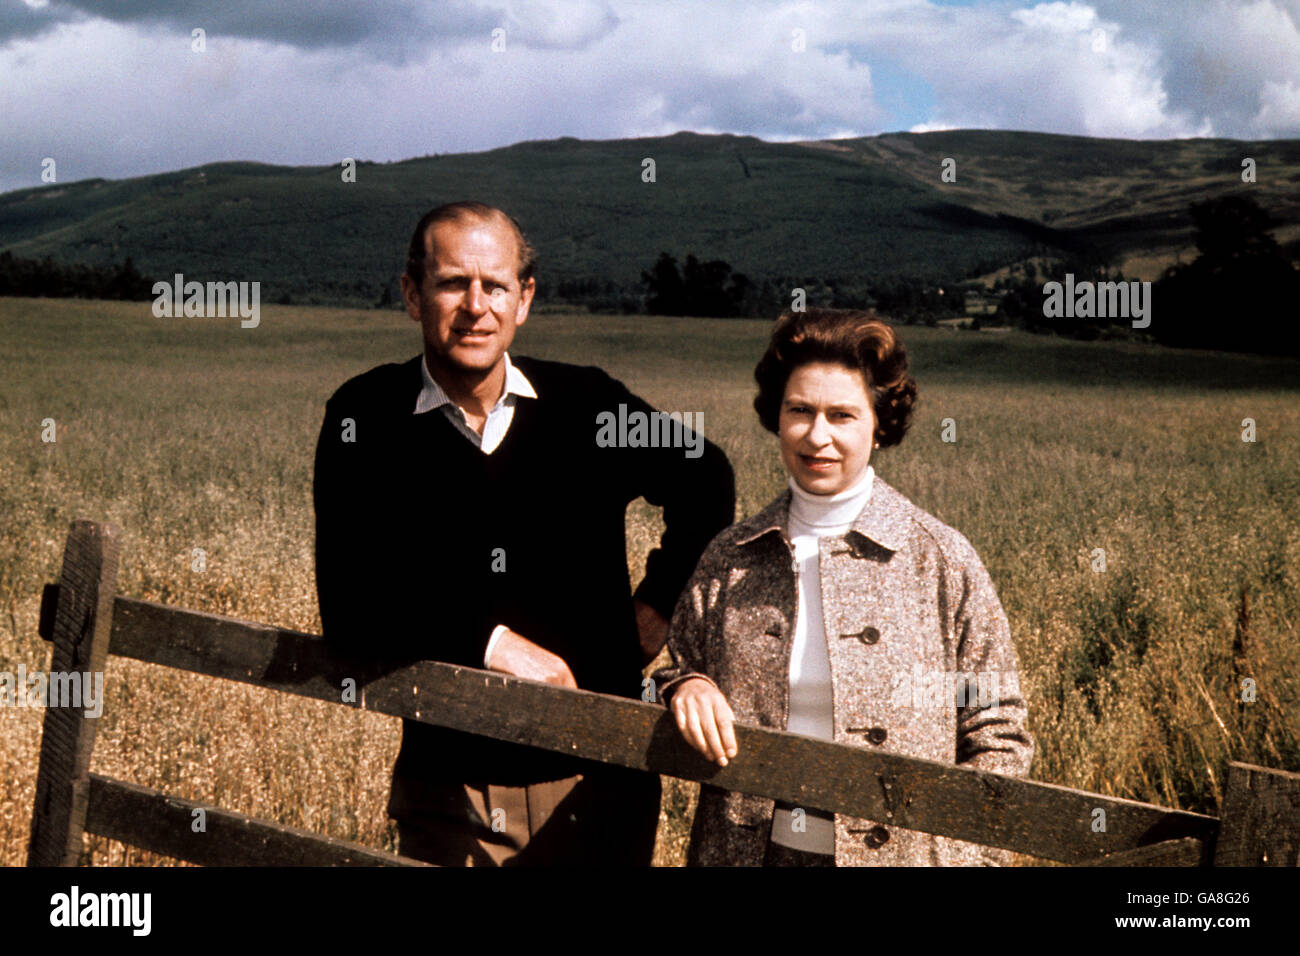 Royalty - The Queen and Duke of Edinburgh Celebrate Silver Wedding - Balmoral Castle Stock Photo